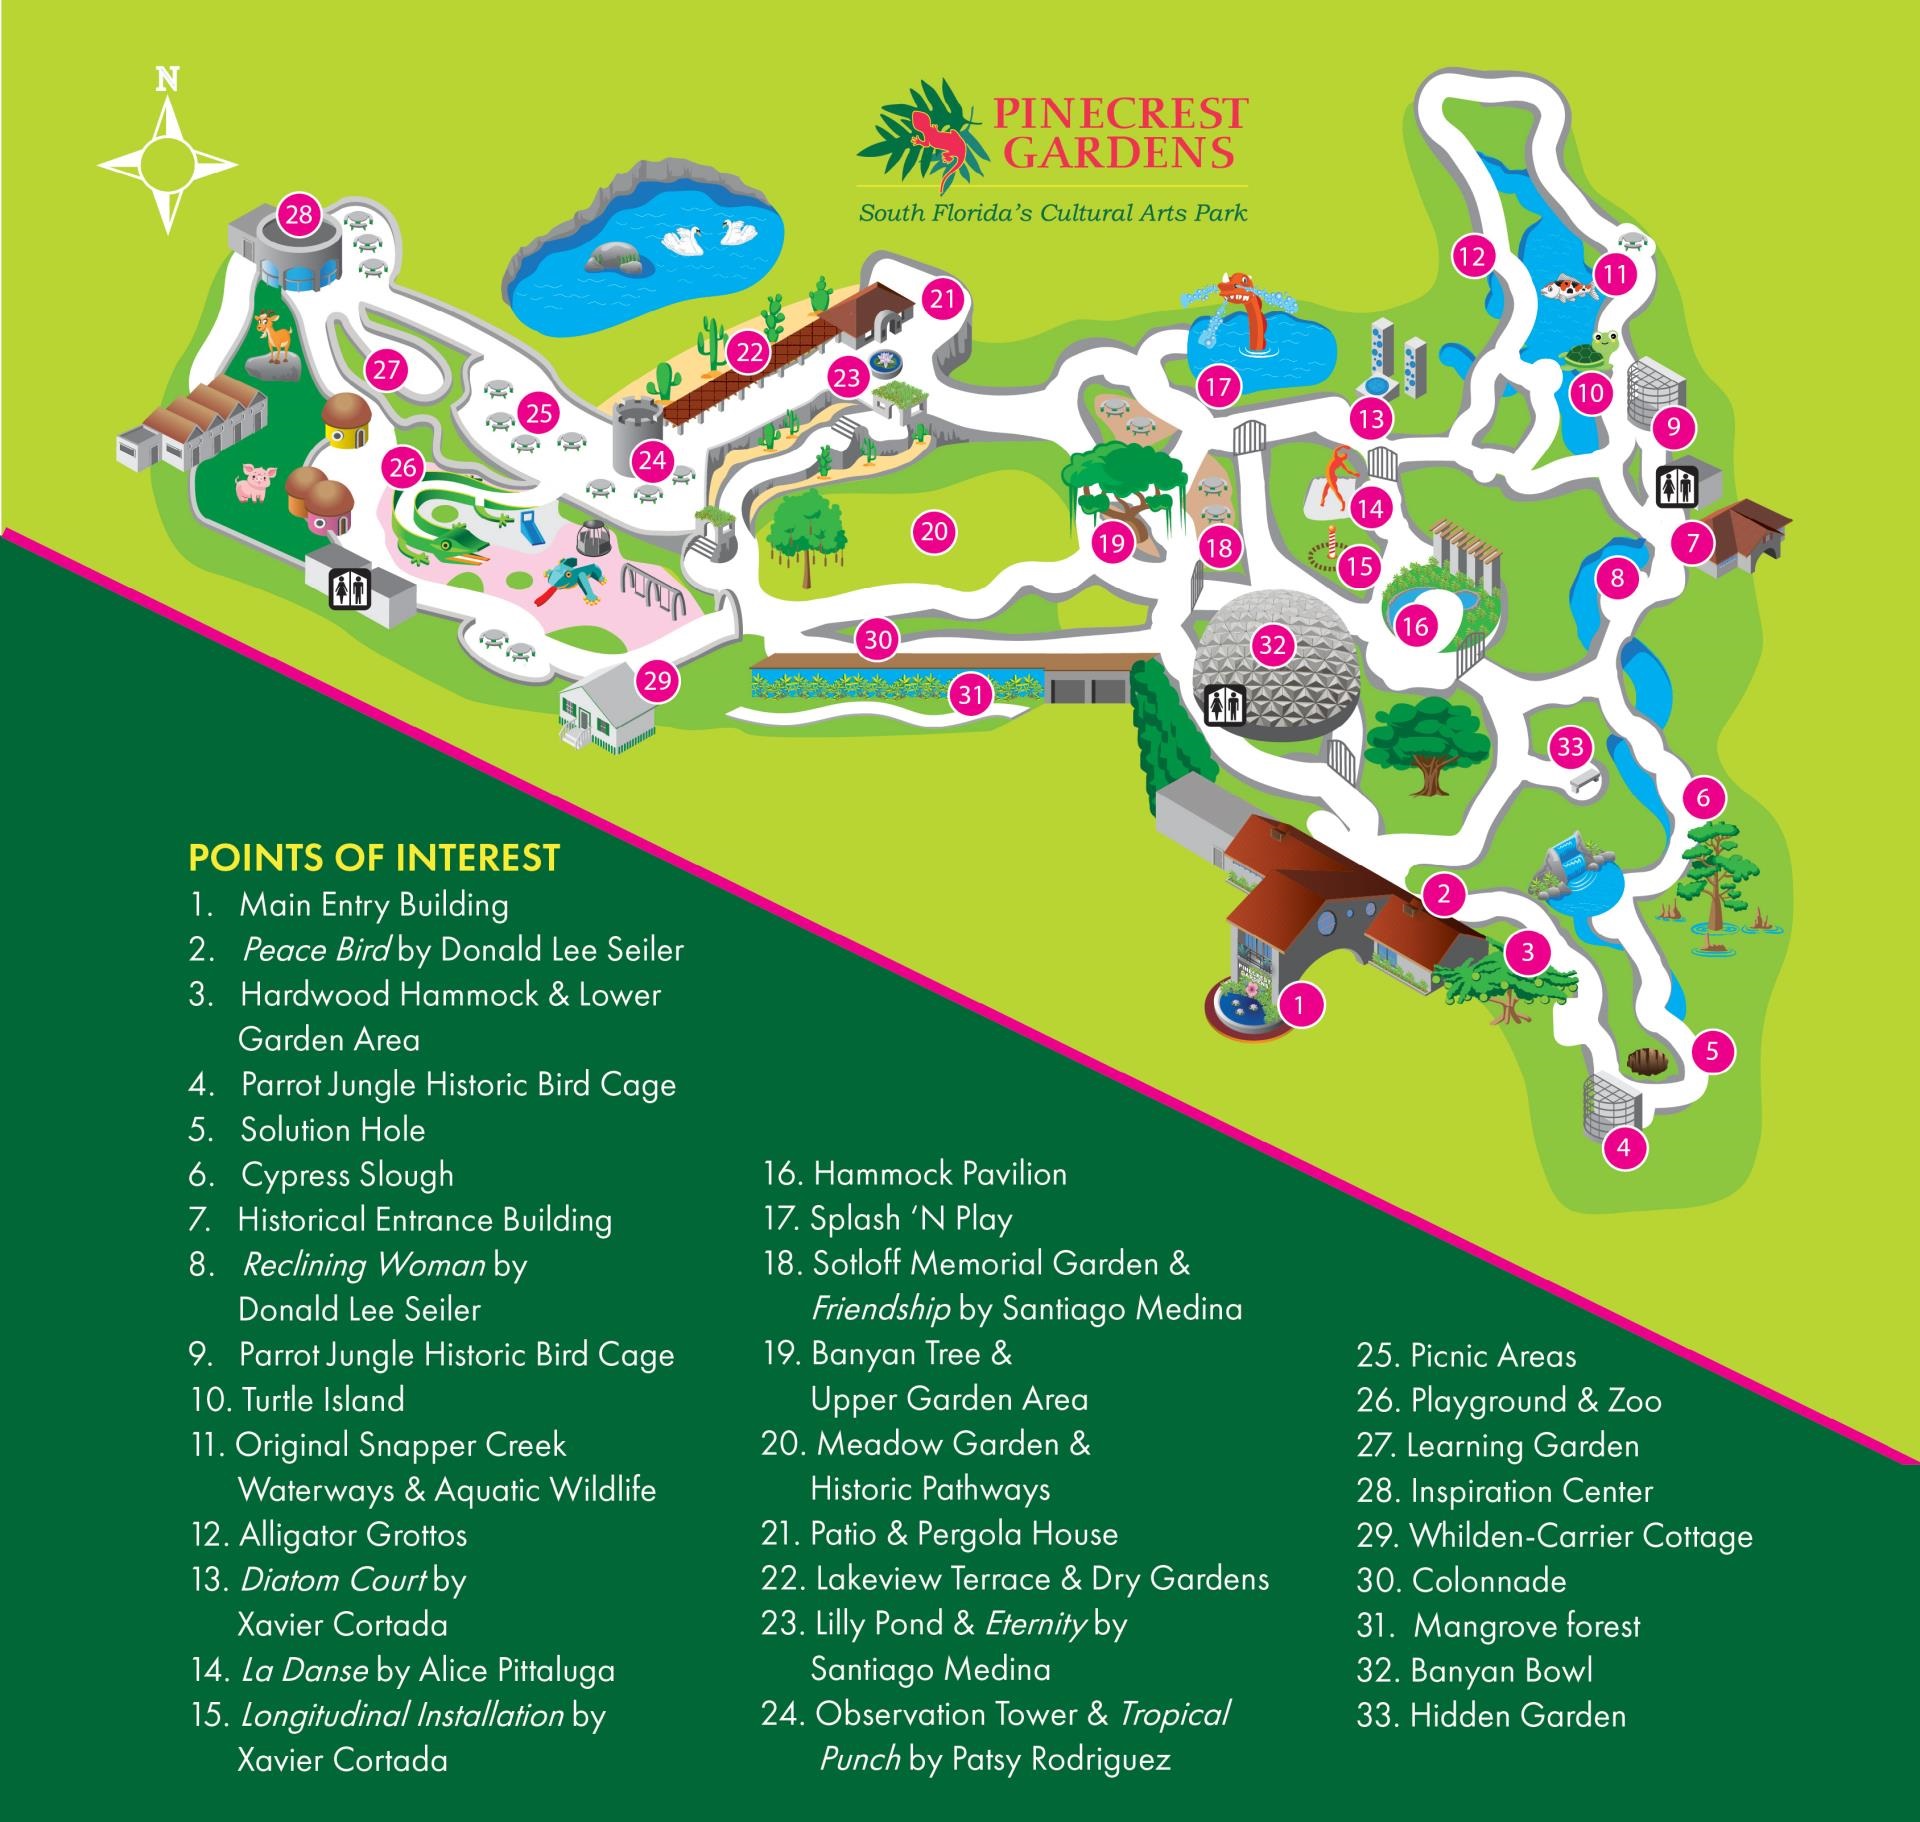 Pinecrest Gardens points of interest map